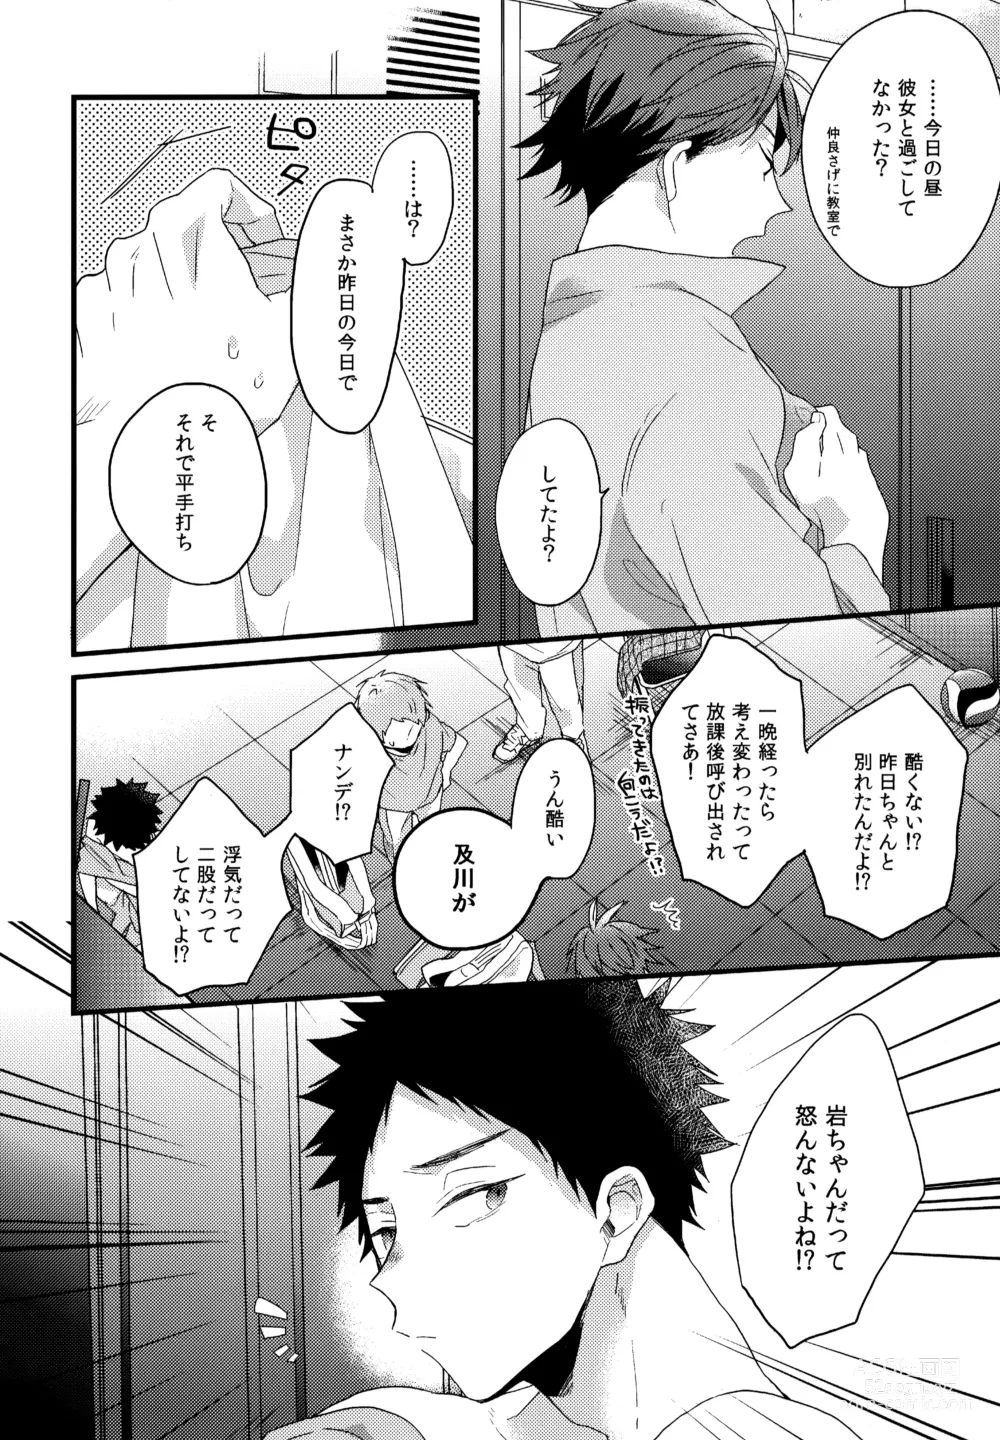 Page 9 of doujinshi Uchidome OiIwa Sairoku 2